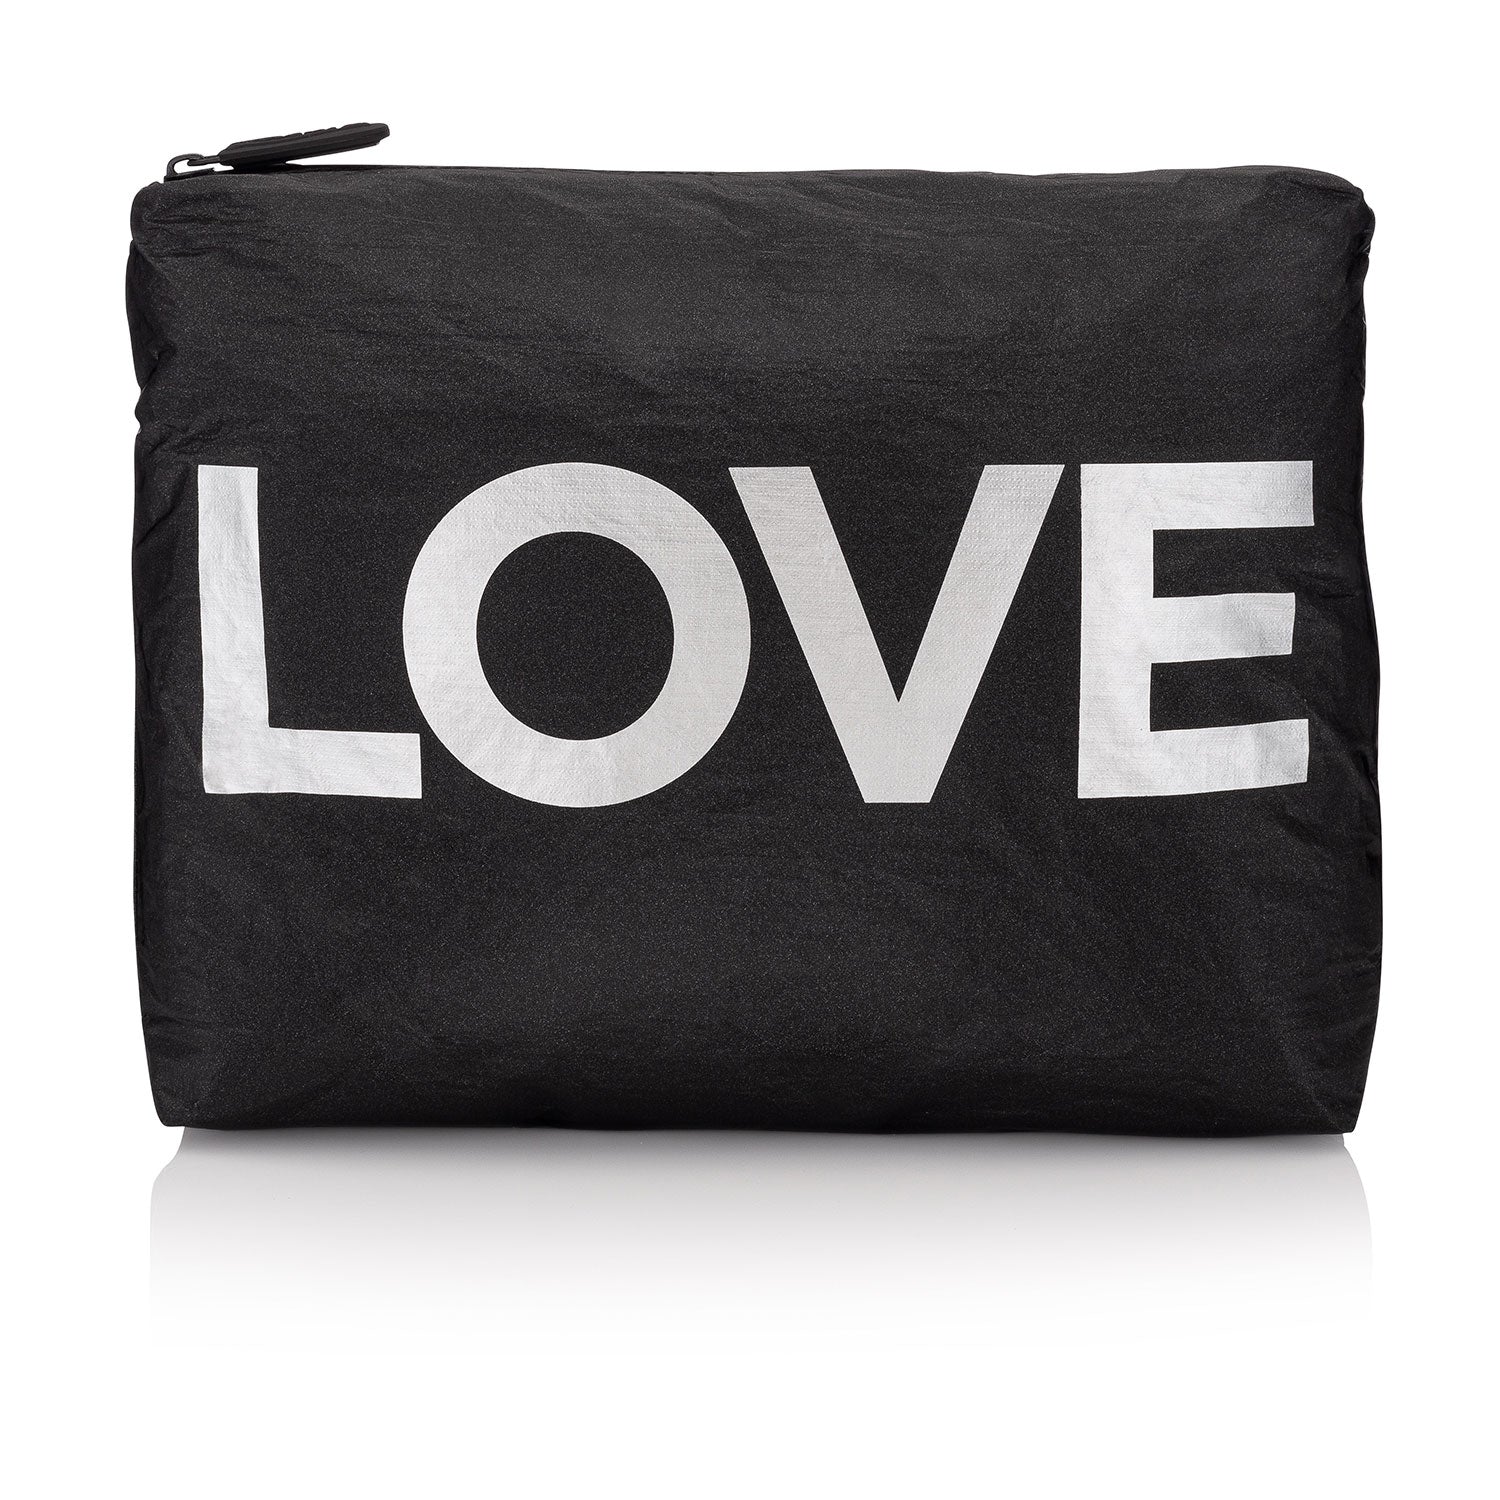 Travel Pack - Beach Bag - Medium Pack - Black with Metallic Silver "LOVE"